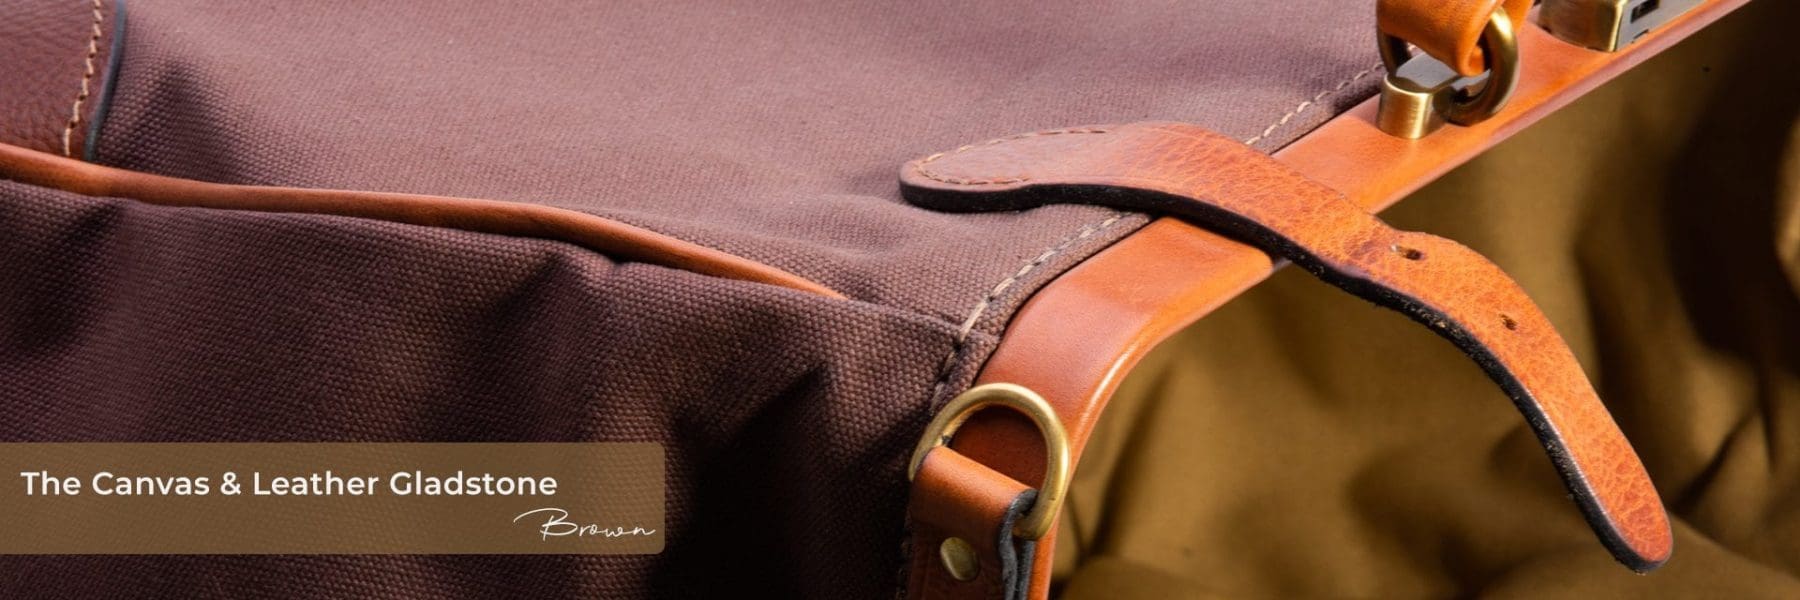 Waterproof travel bag in canvas & leather brown, handmade by Mackenzie Leather Edinburgh.